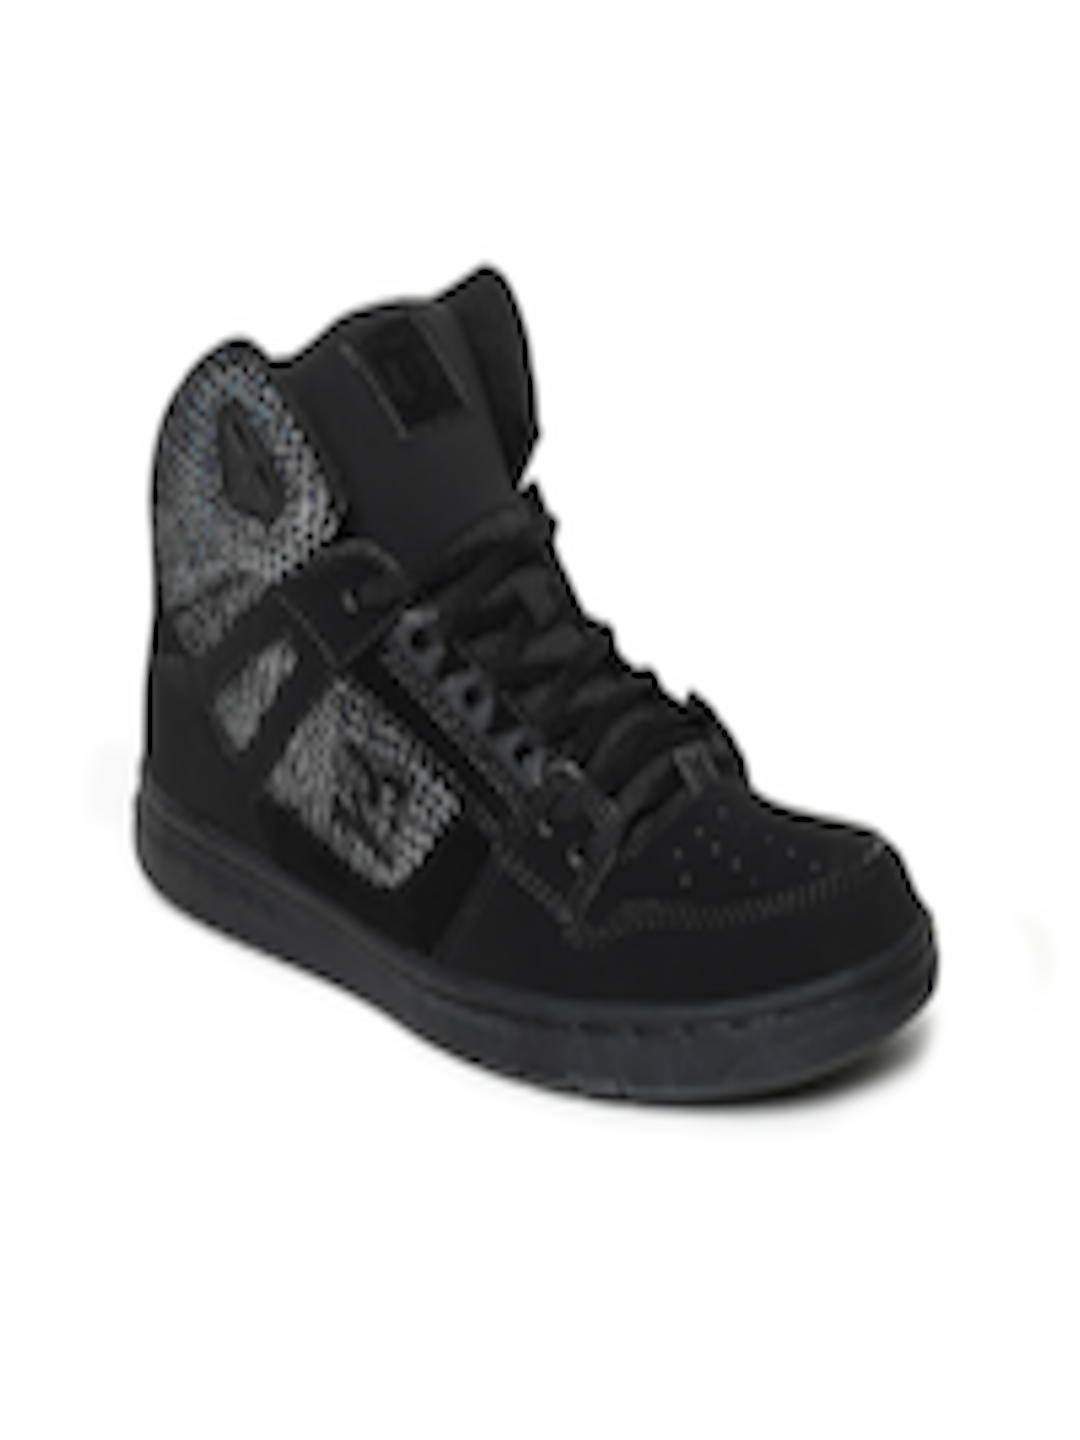 Buy DC Women Black Sneakers - Casual Shoes for Women 8628945 | Myntra